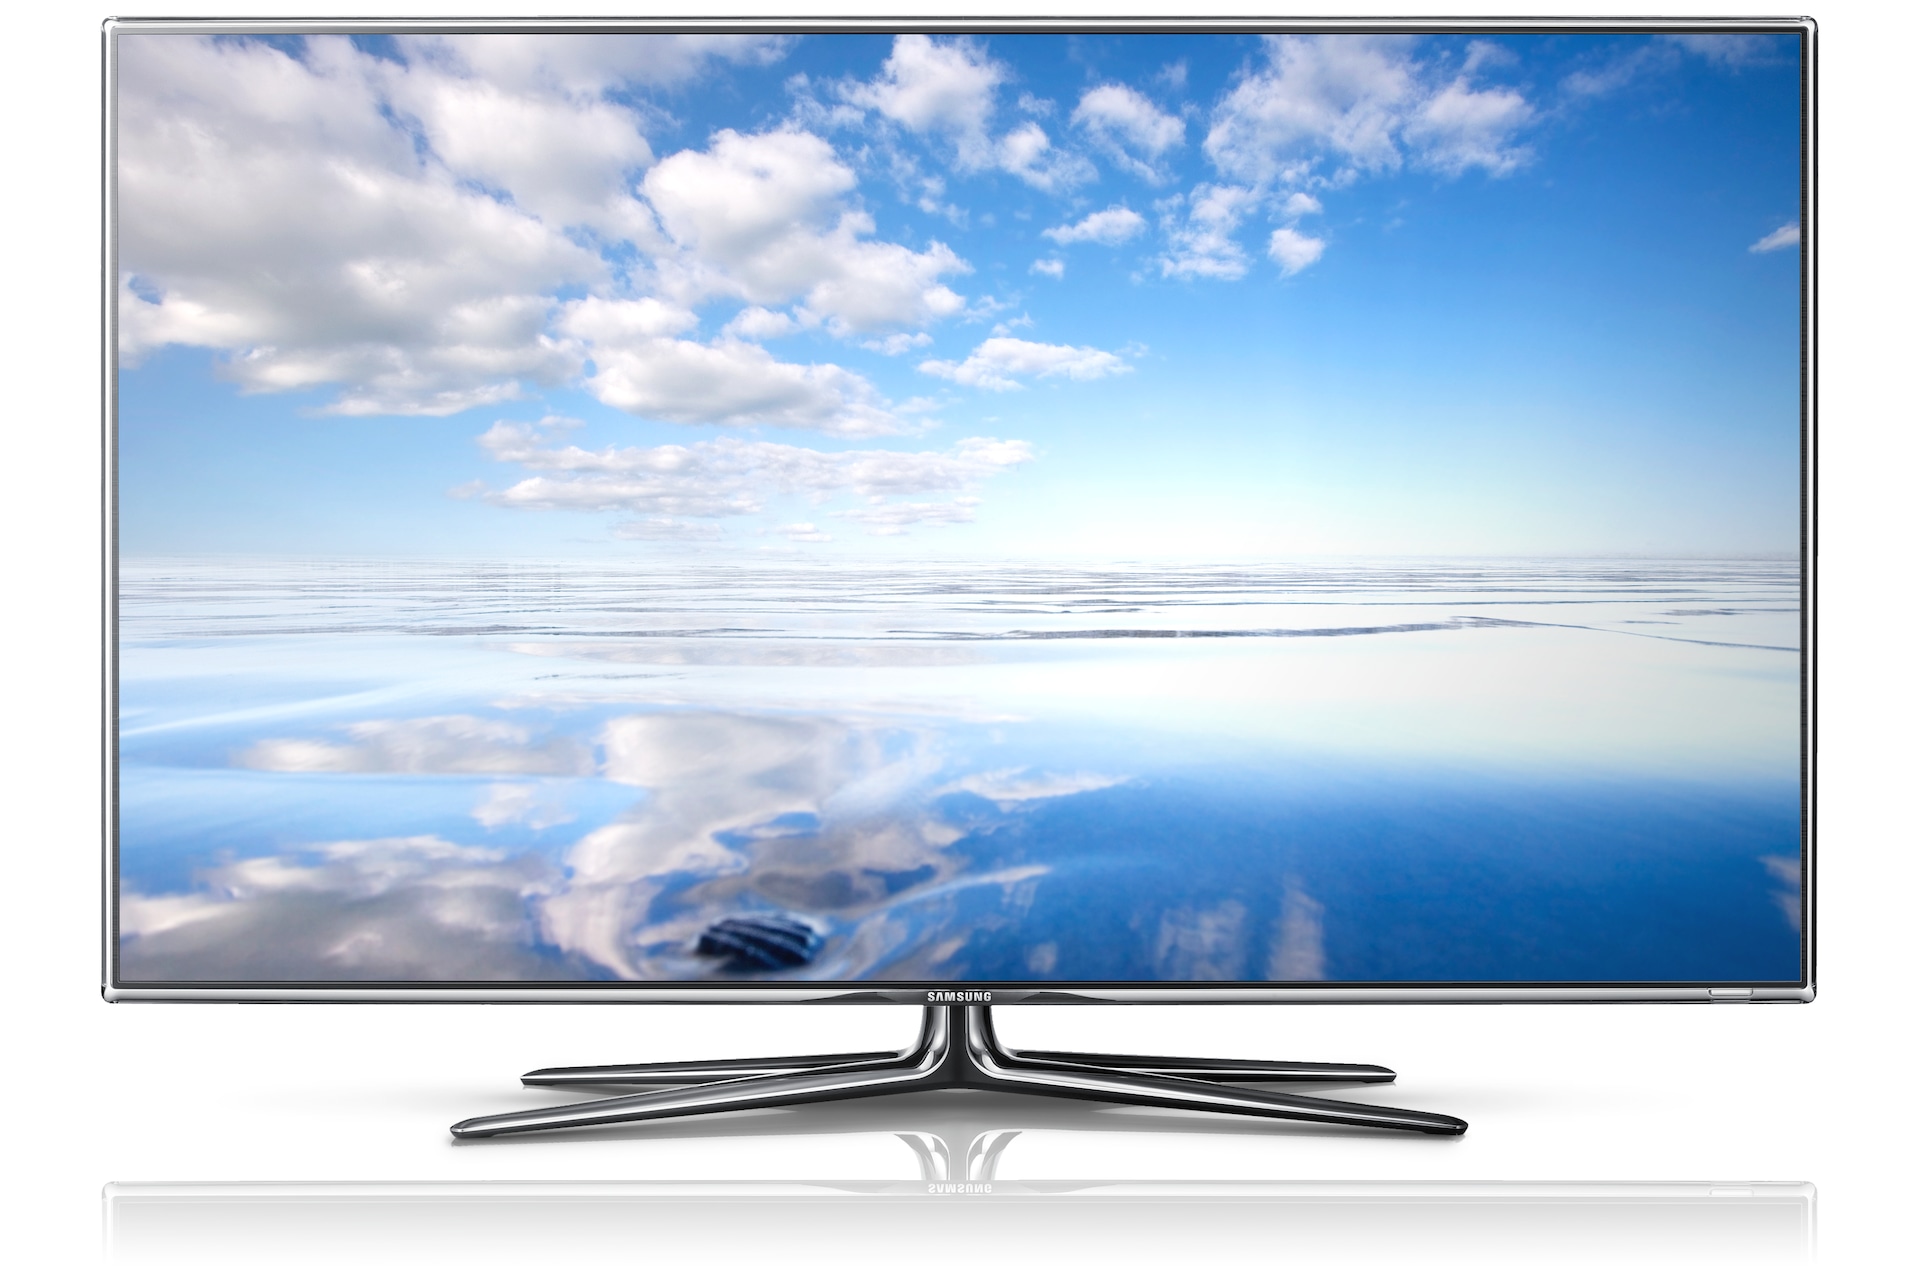 55" D7000 Series 7 SMART 3D Full HD LED TV | Samsung Support UK